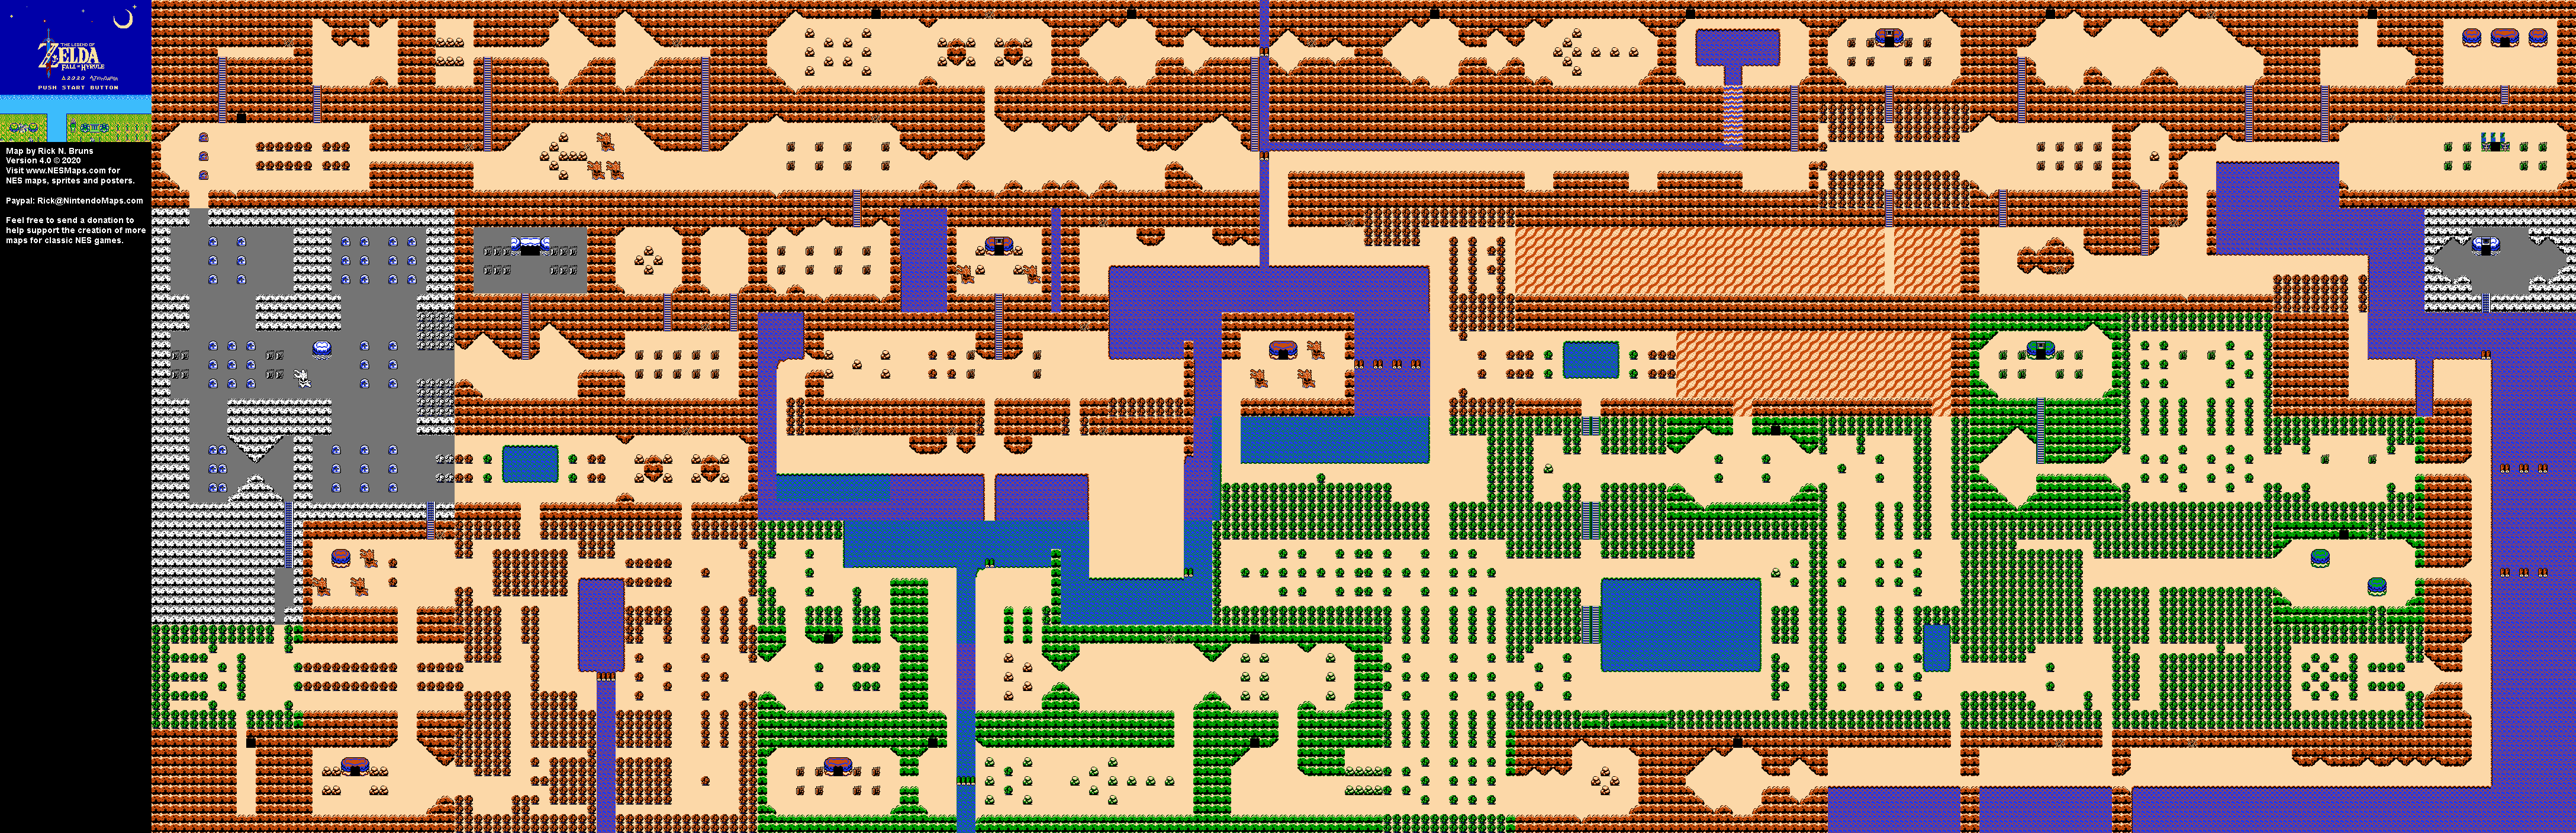 The Legend of Zelda - Fall of Hyrule Overworld - NES Map